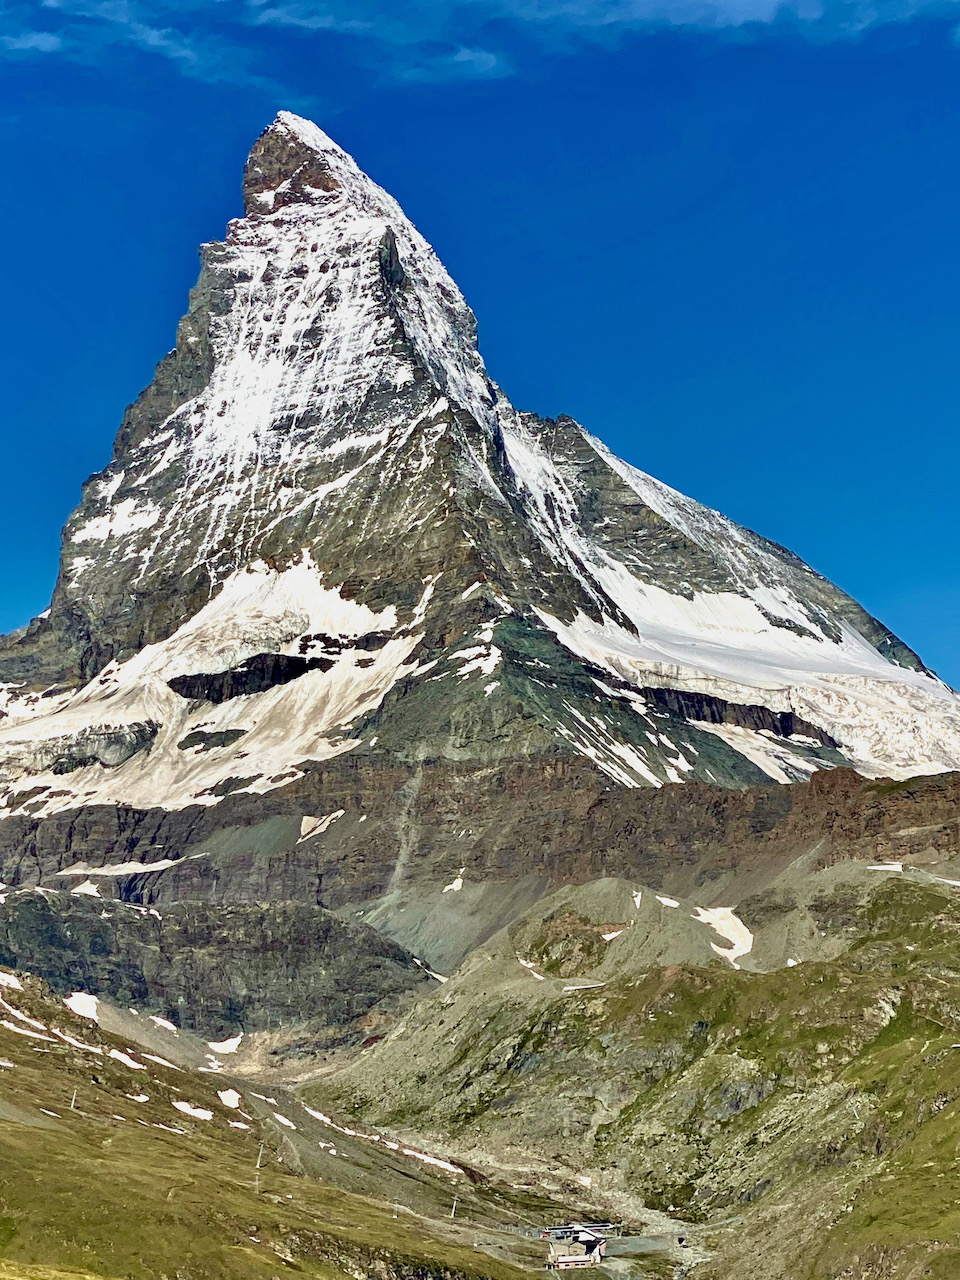 The Matterhorn in Zermatt, Switzerland